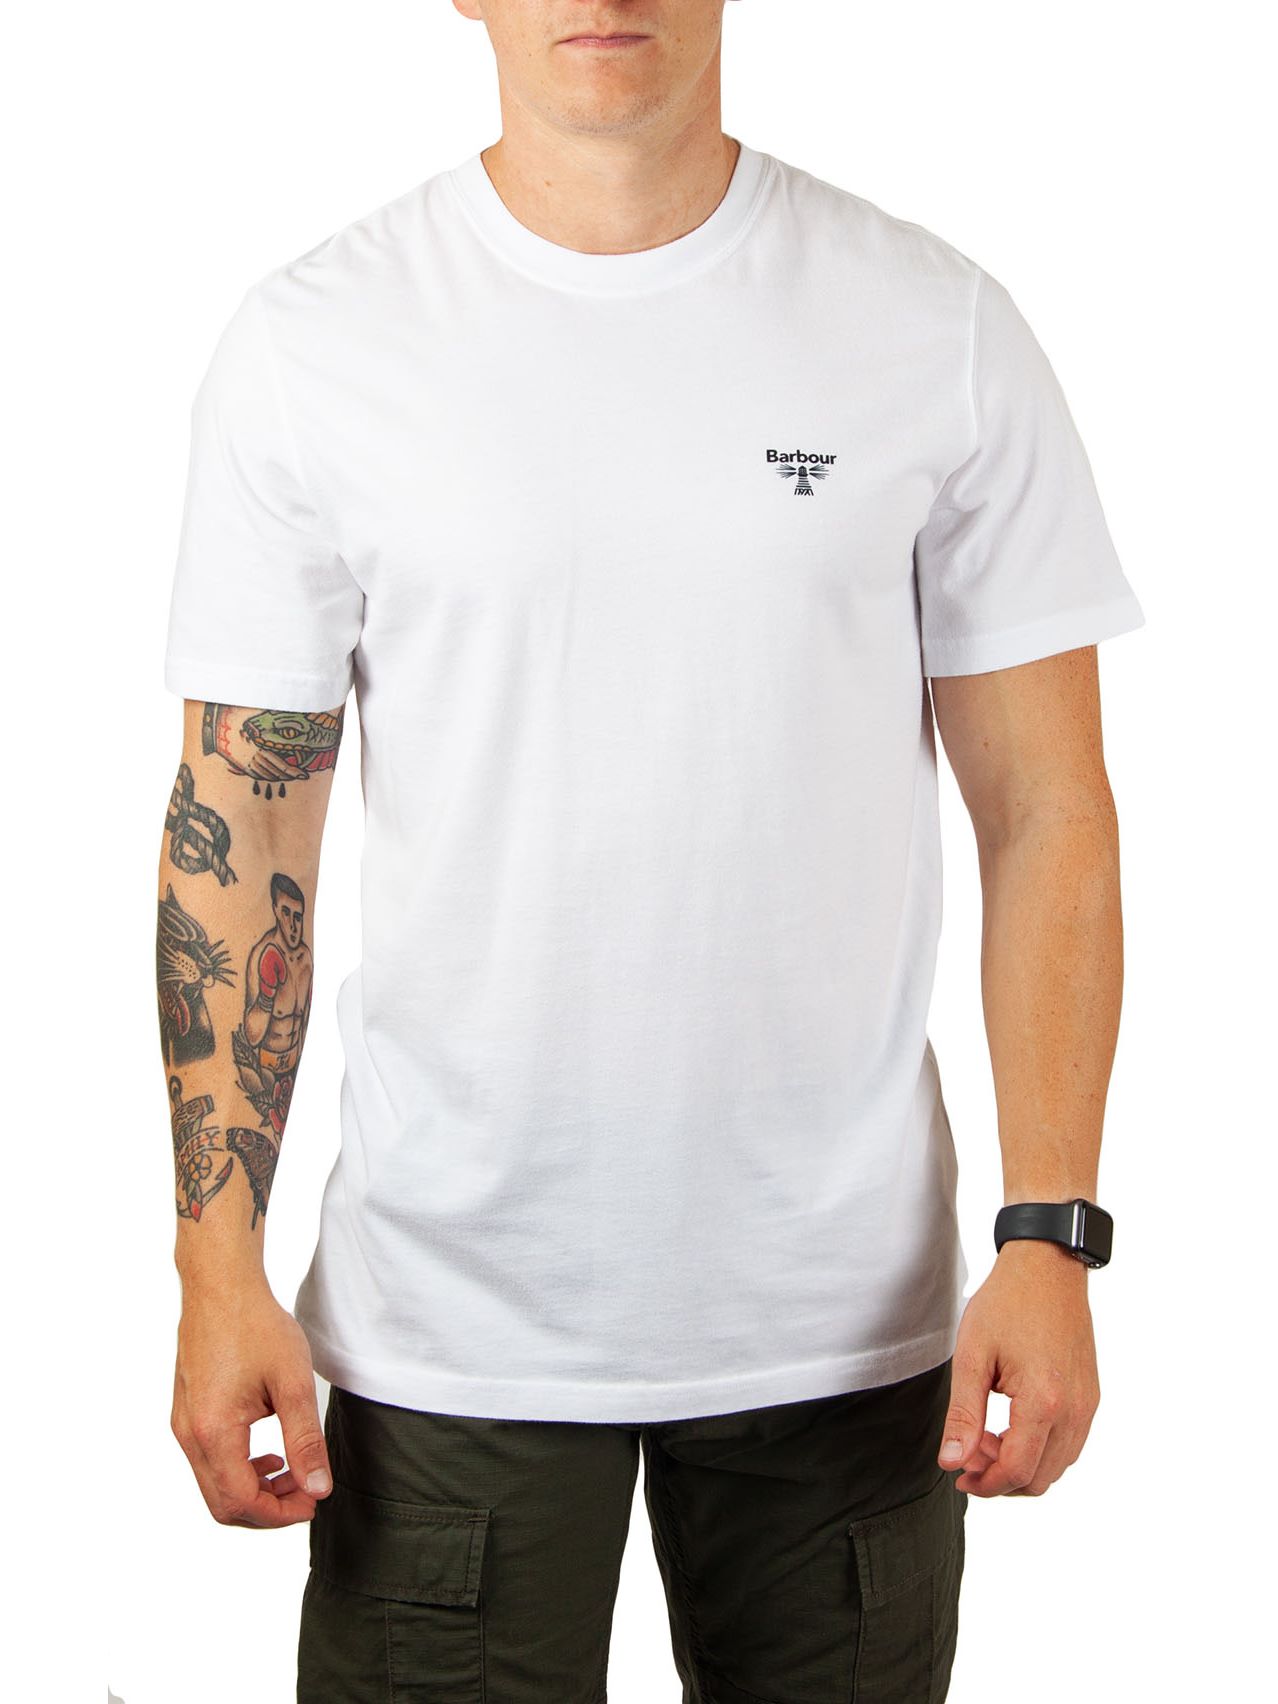 Barbour Beacon Small Logo T-Shirt in White | Dapper Street